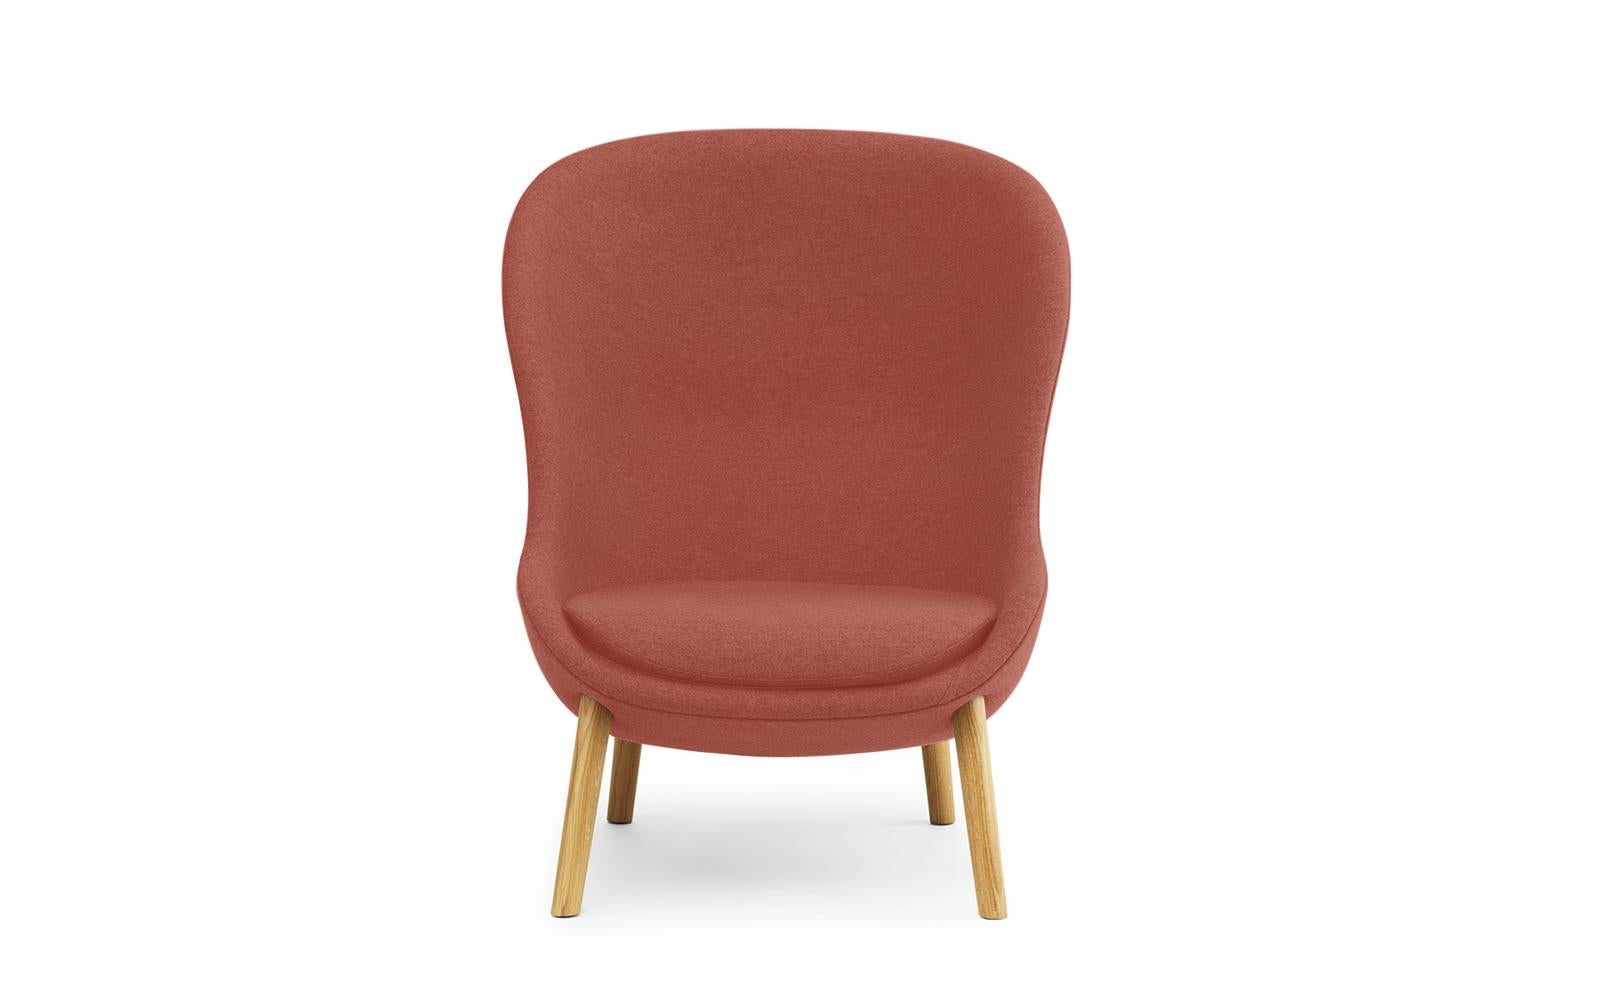 For Sale: Red (Sørensen Leather Spectrum Red Brown) Normann Copenhagen Hyg Lounge Chair High Oak in Sørensen Spectrum Leather